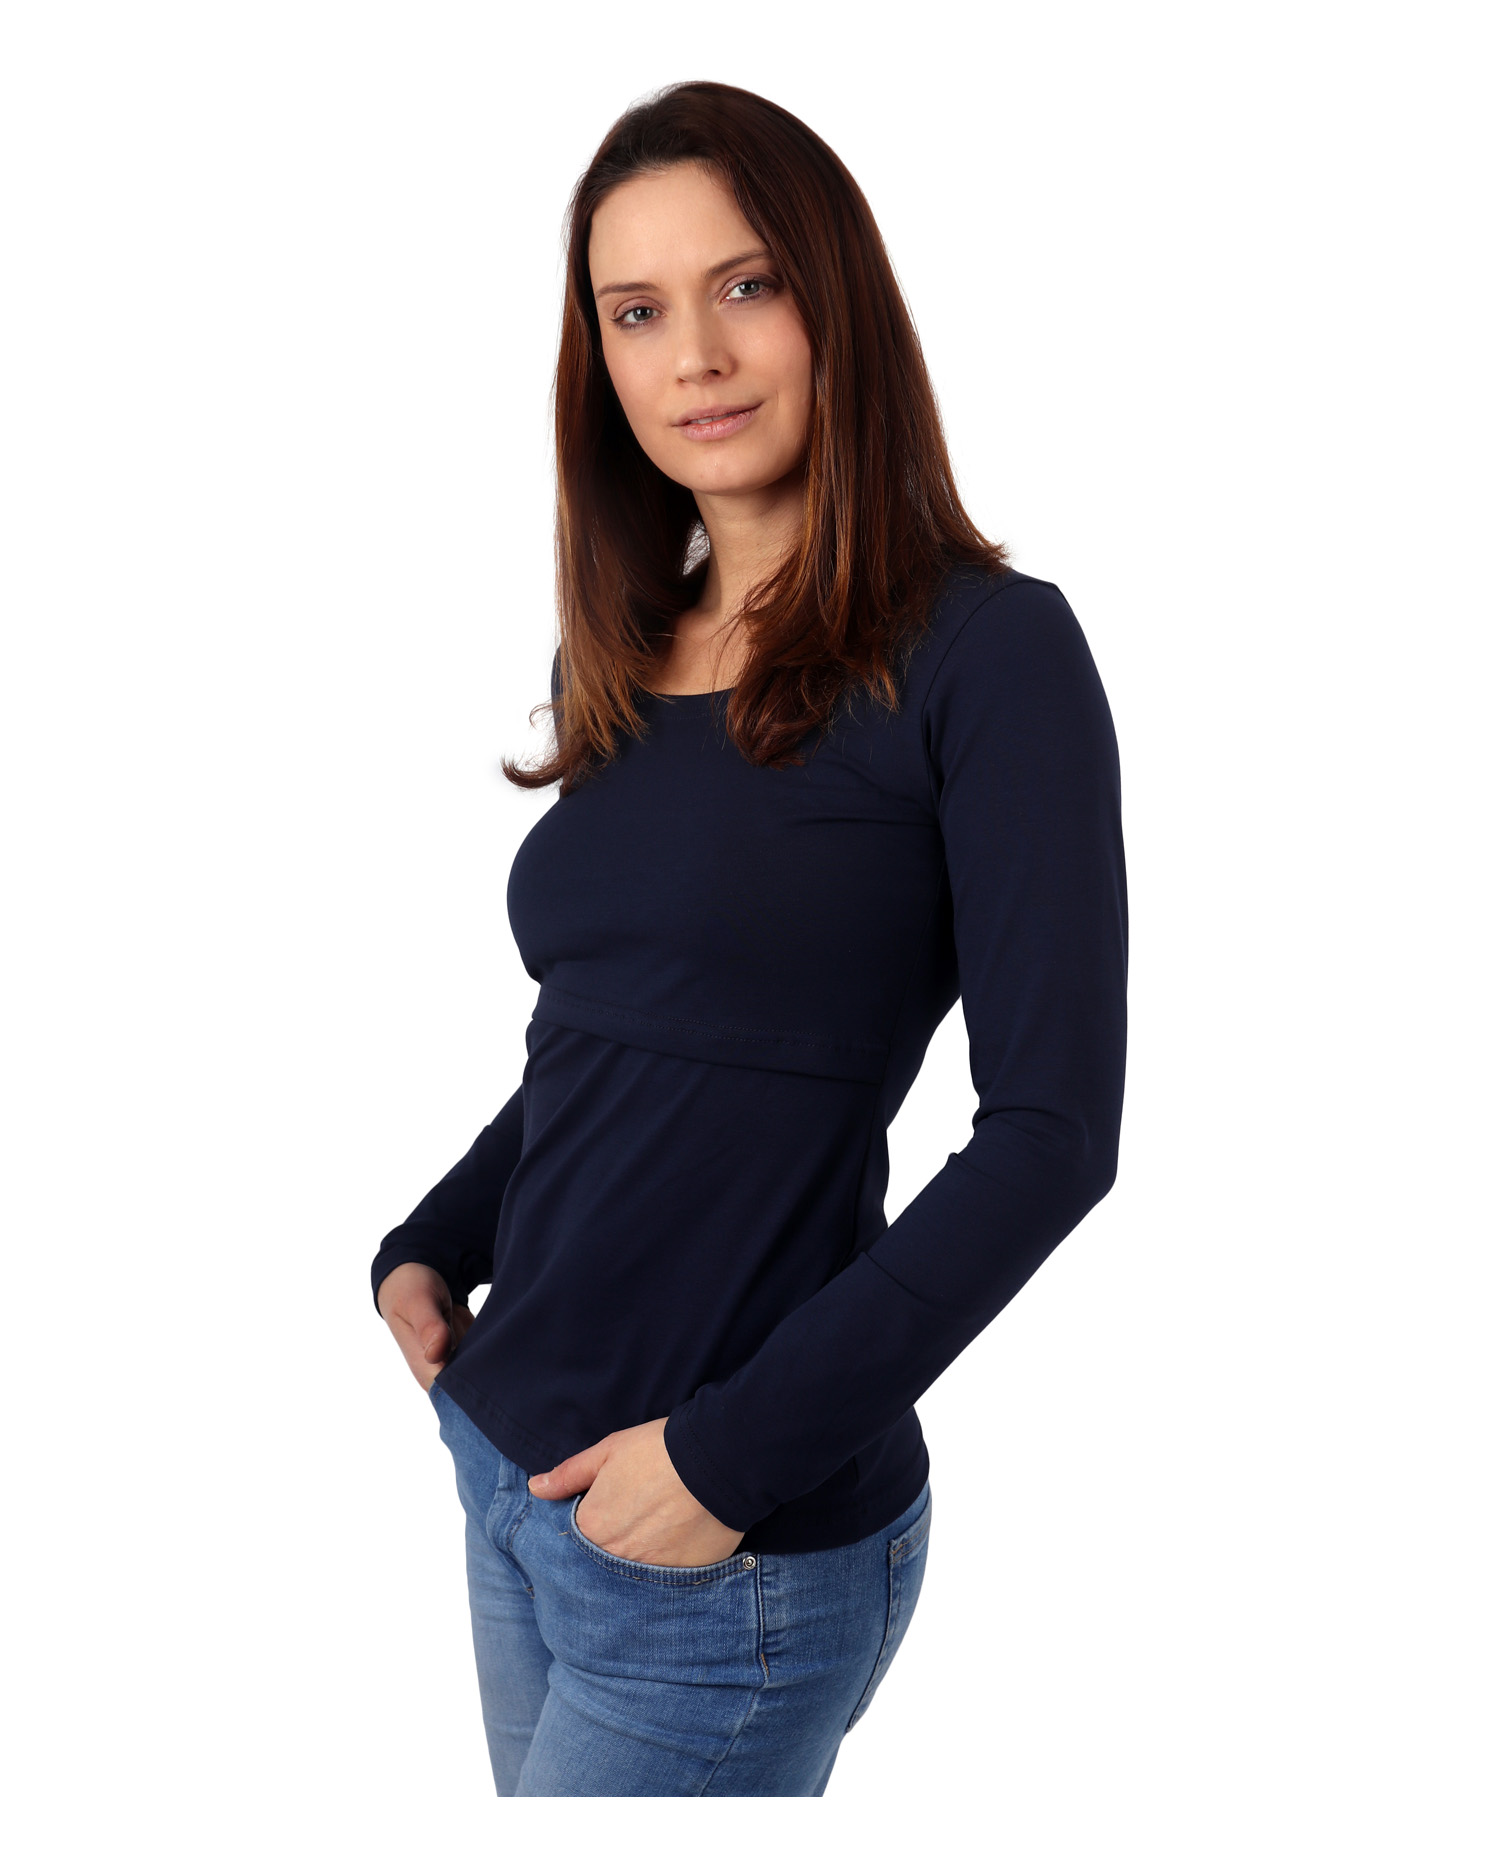 Breast-feeding T-shirt Katerina, long sleeves, DARK BLUE